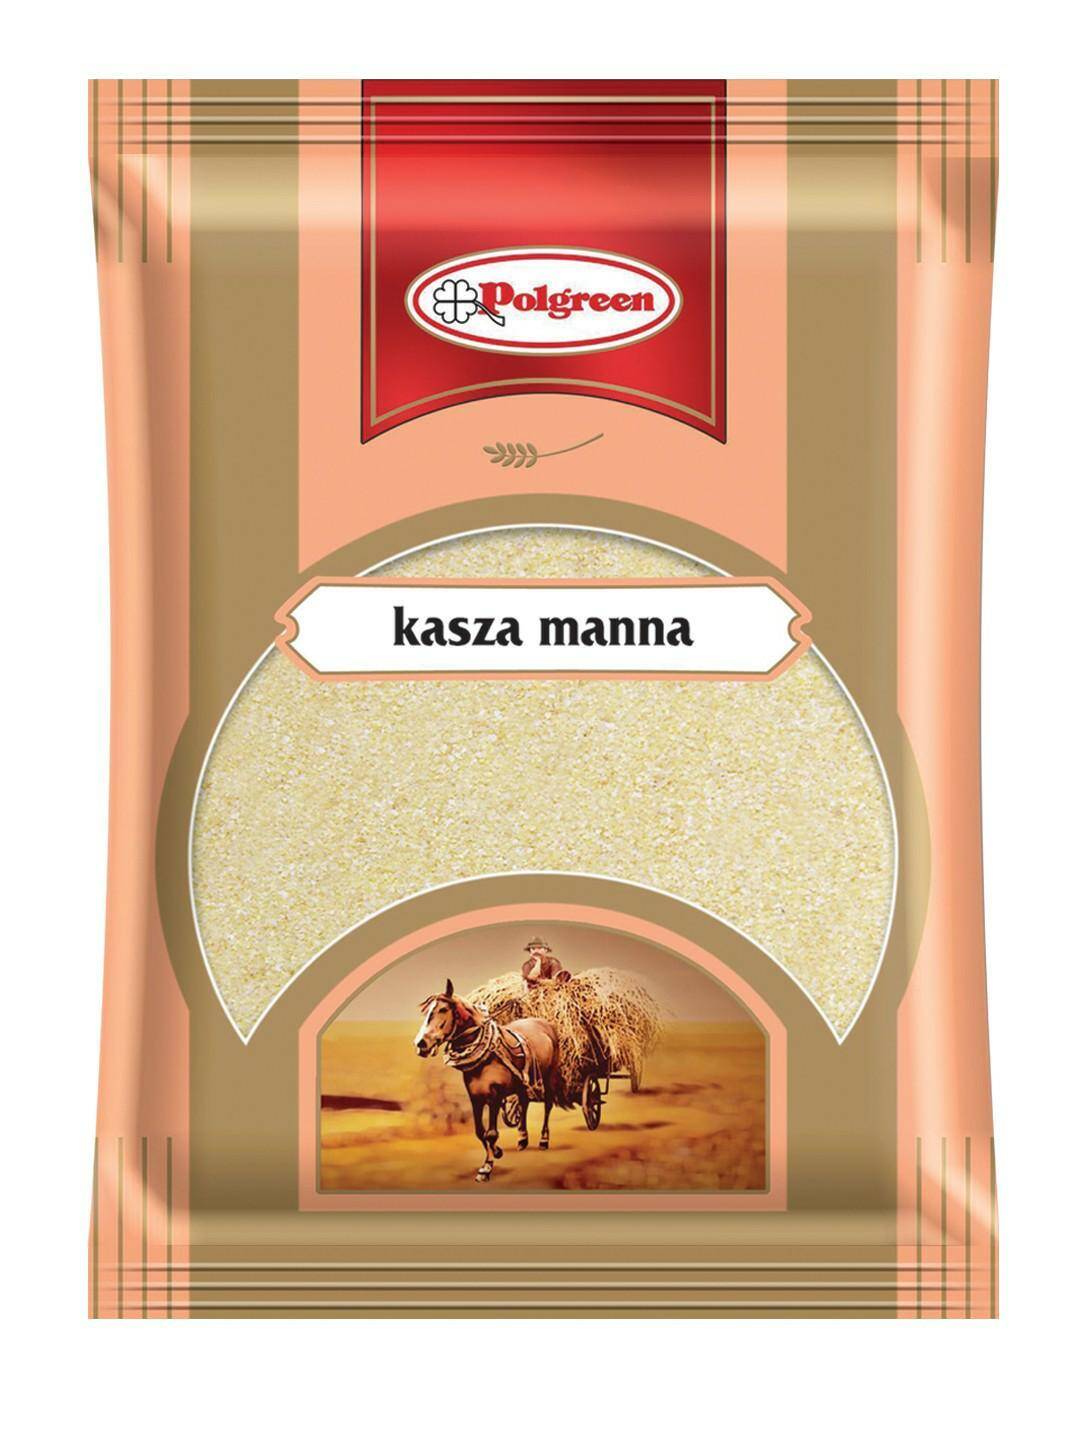 POLGREEN kasza manna 500g*14.